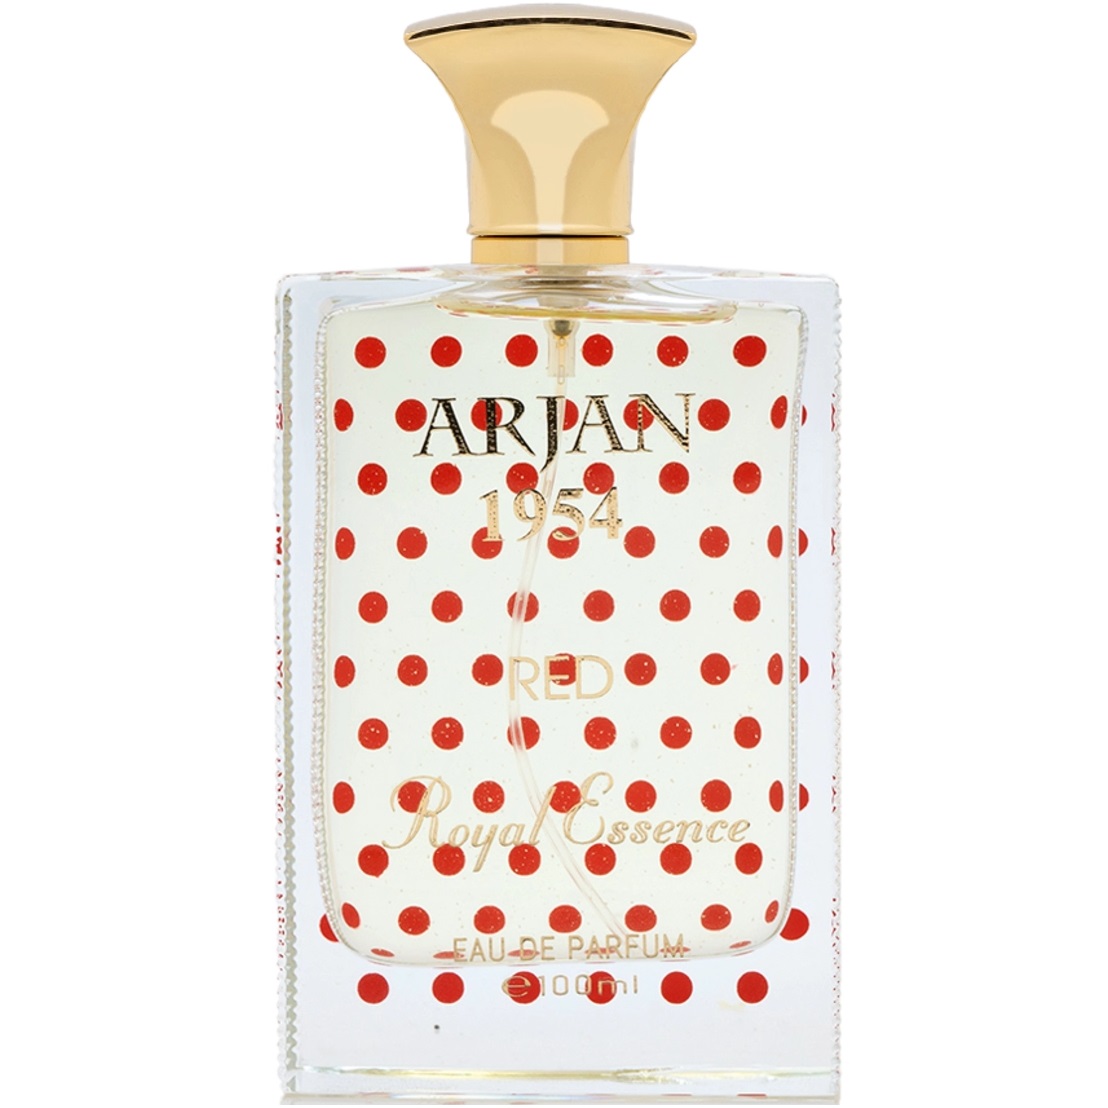 Norana Perfumes - Arjan 1954 Red (10мл)